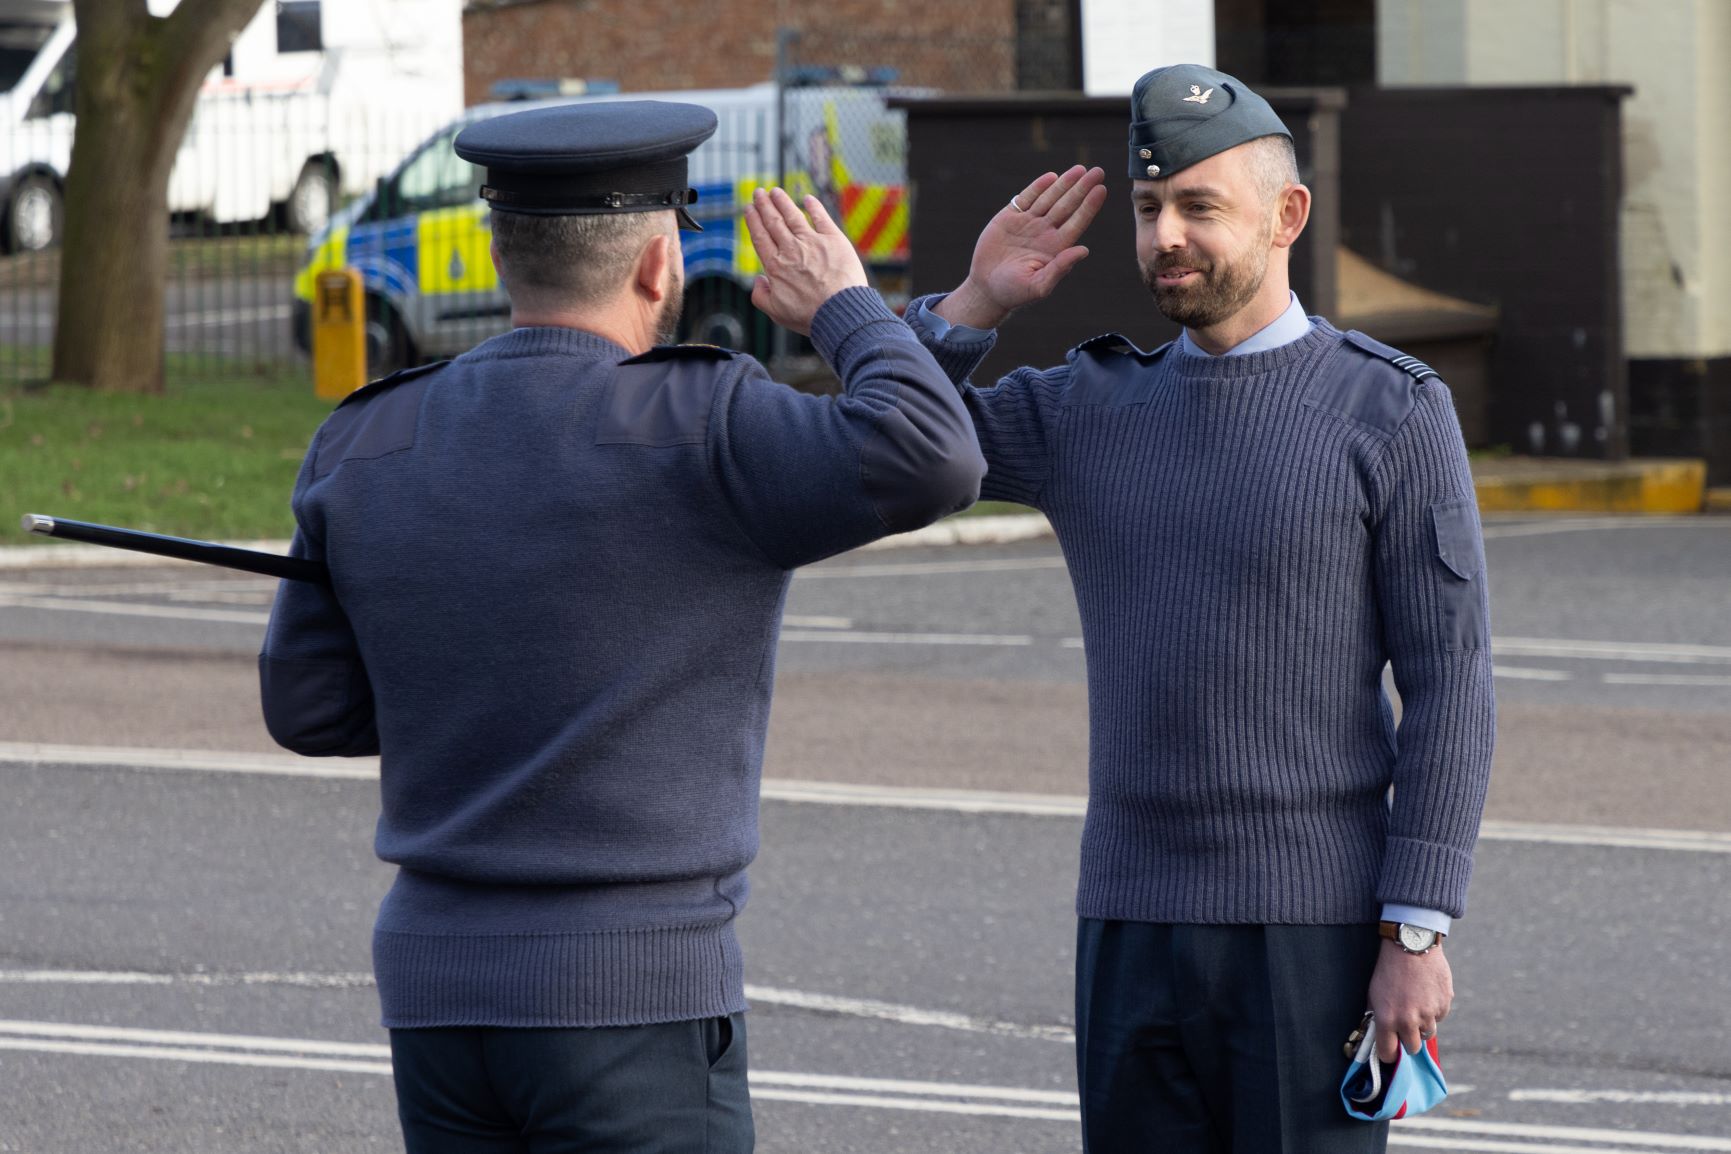 Image show Station Commander saluting RAF aviator.